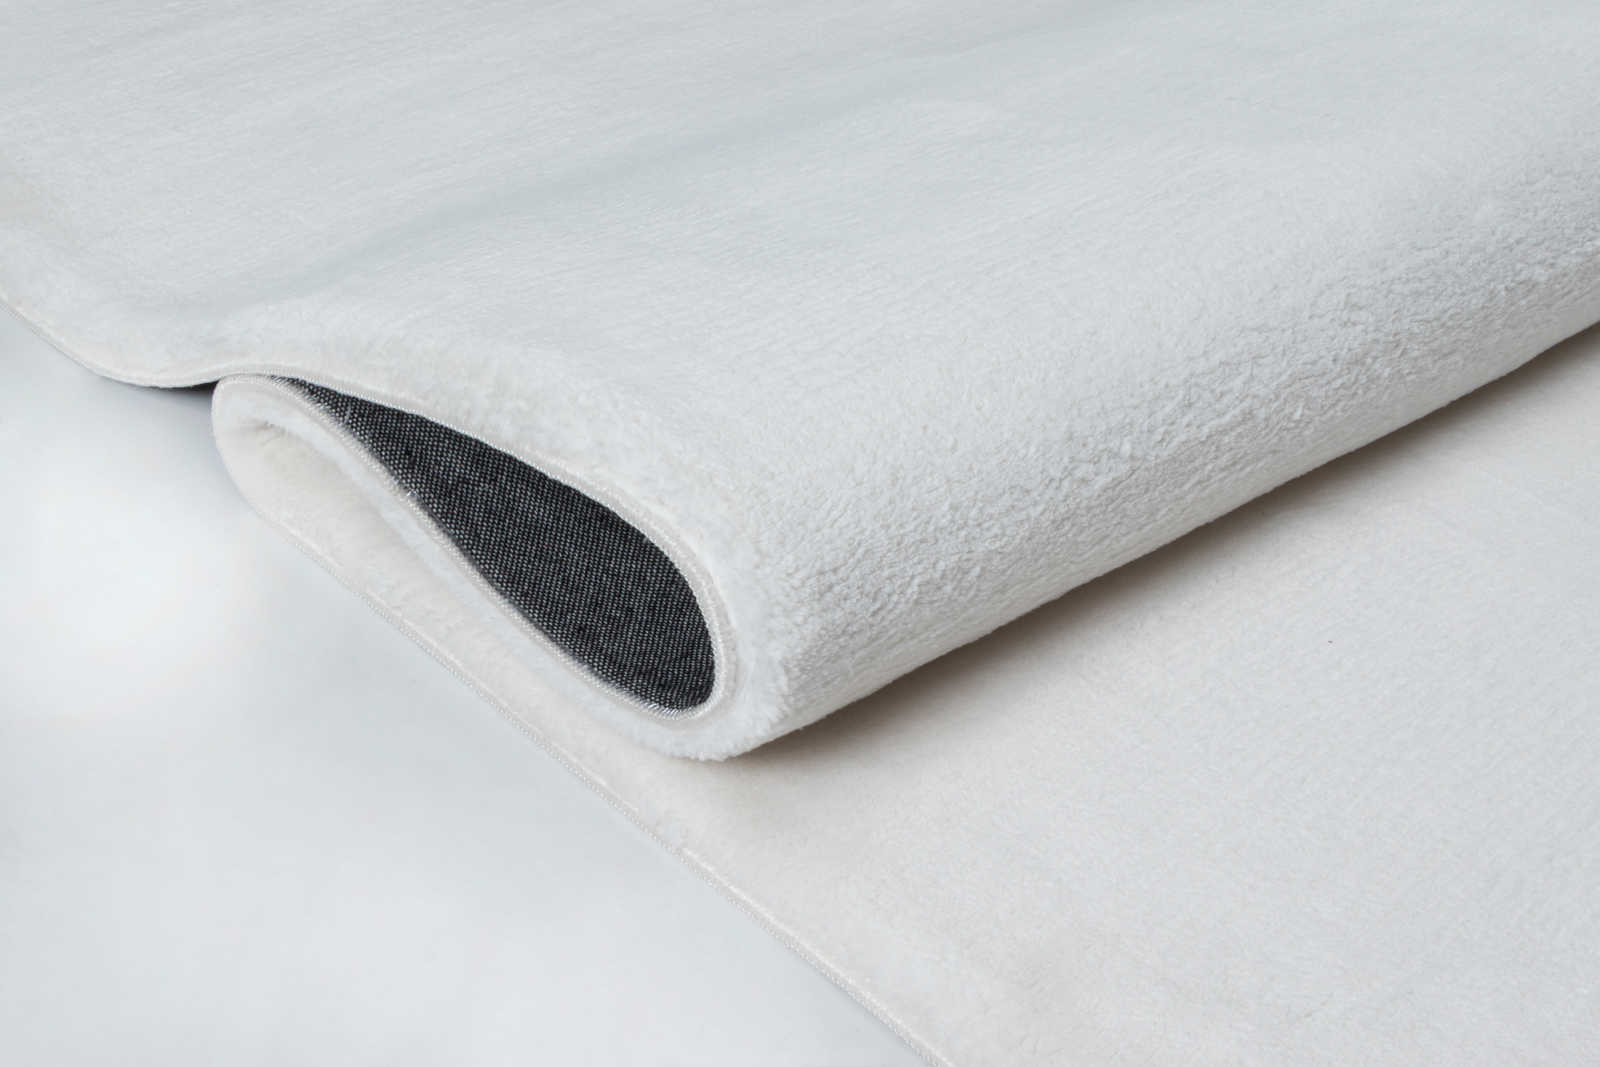             Fluffy high pile carpet in pleasant cream - 110 x 60 cm
        